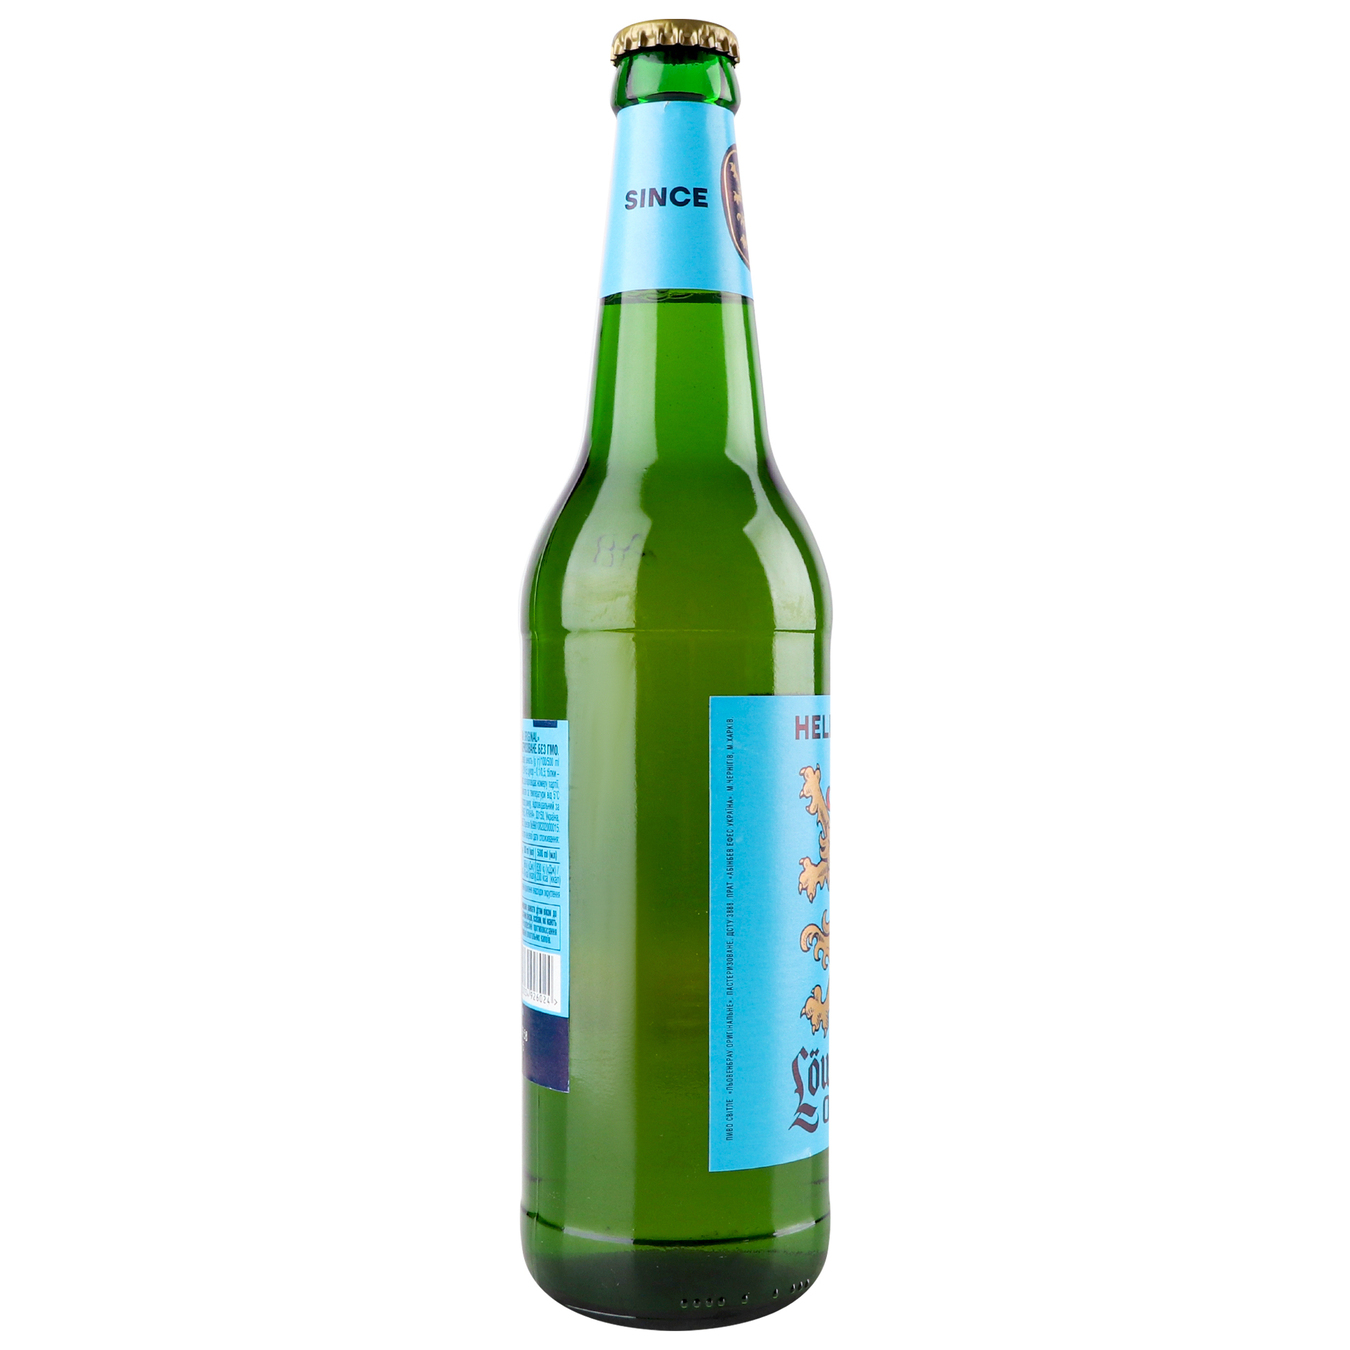 Beer Lowenbrau Original light pasteurized 5.1% 0.5l glass bottle 3